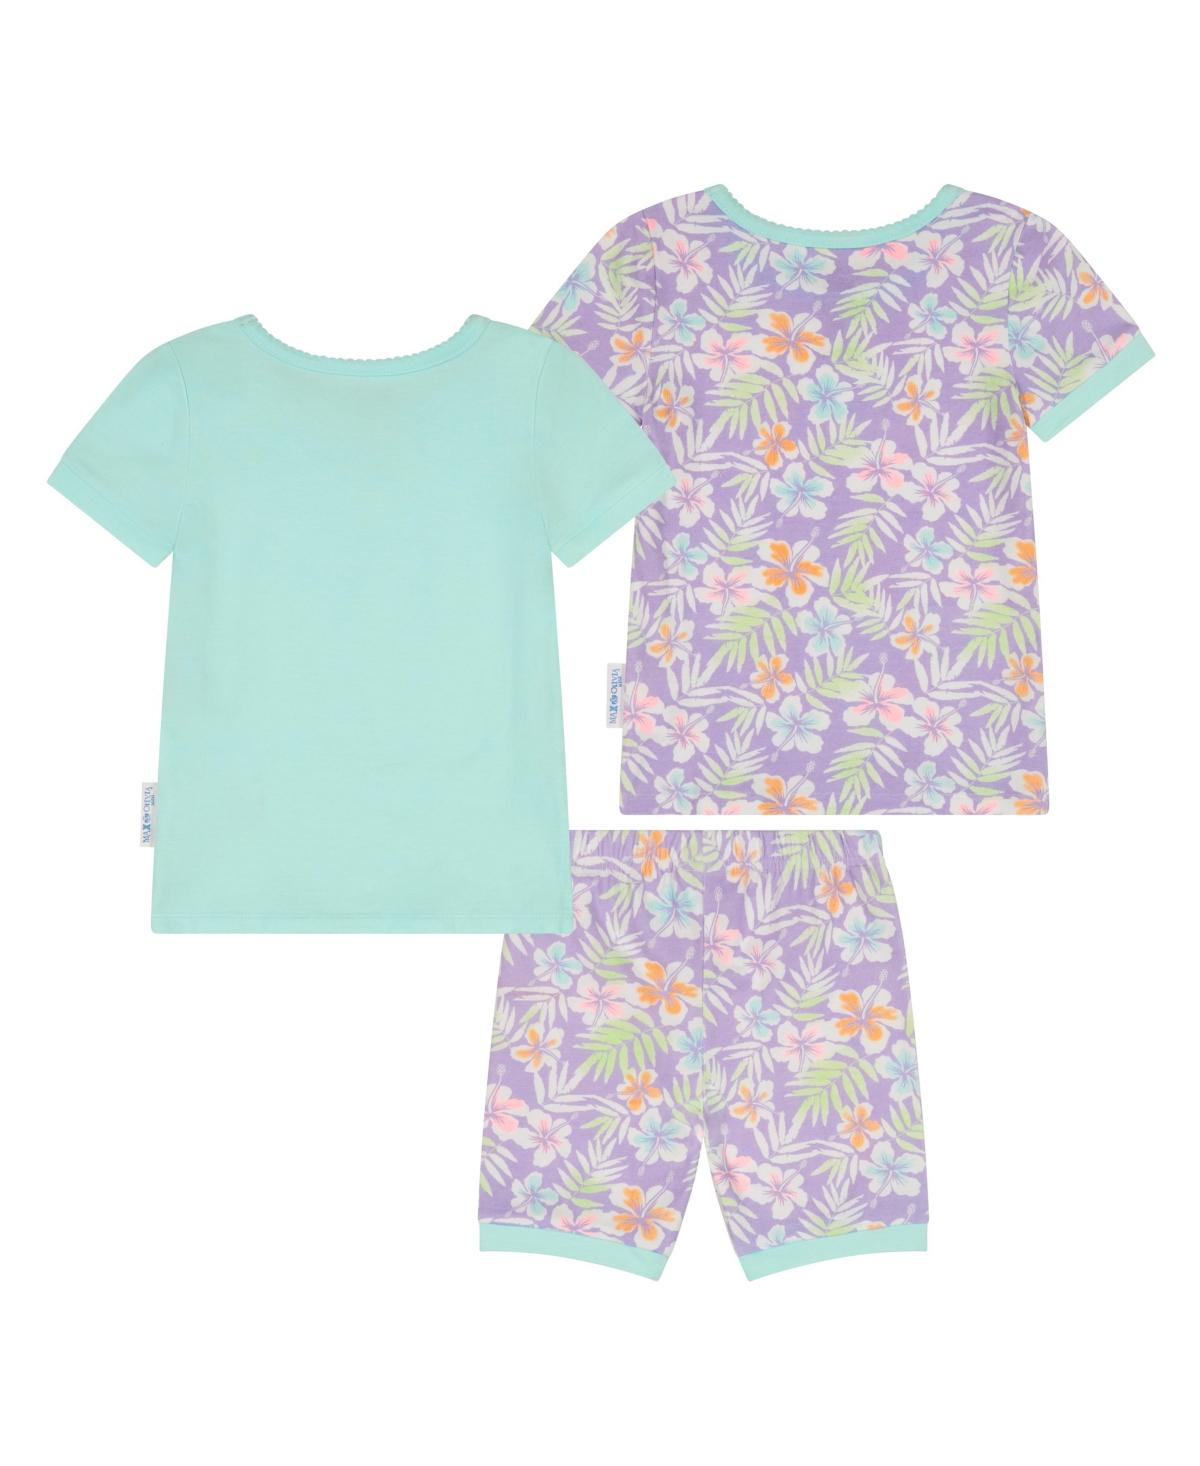 Max & Olivia Babies' Toddler Girls Purple Floral Snug Fit Pajama, 3 Piece Set In Turq